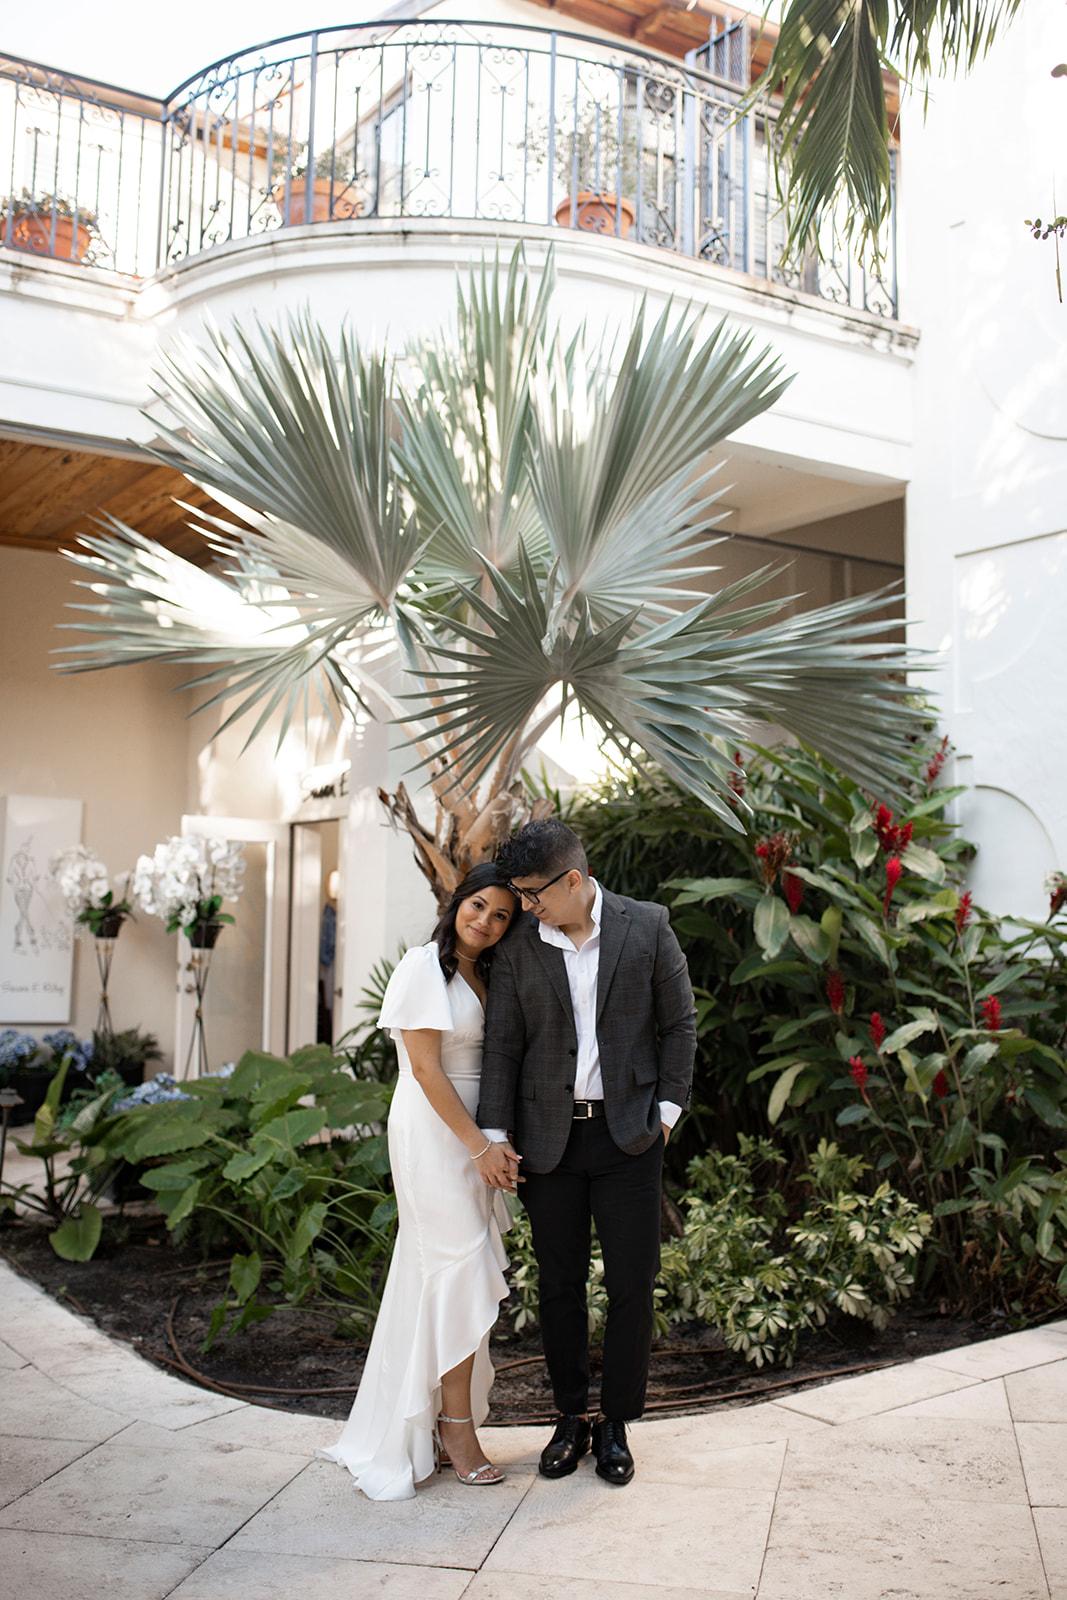 The Wedding Website of Ana Tinoco and Jorge Labrin